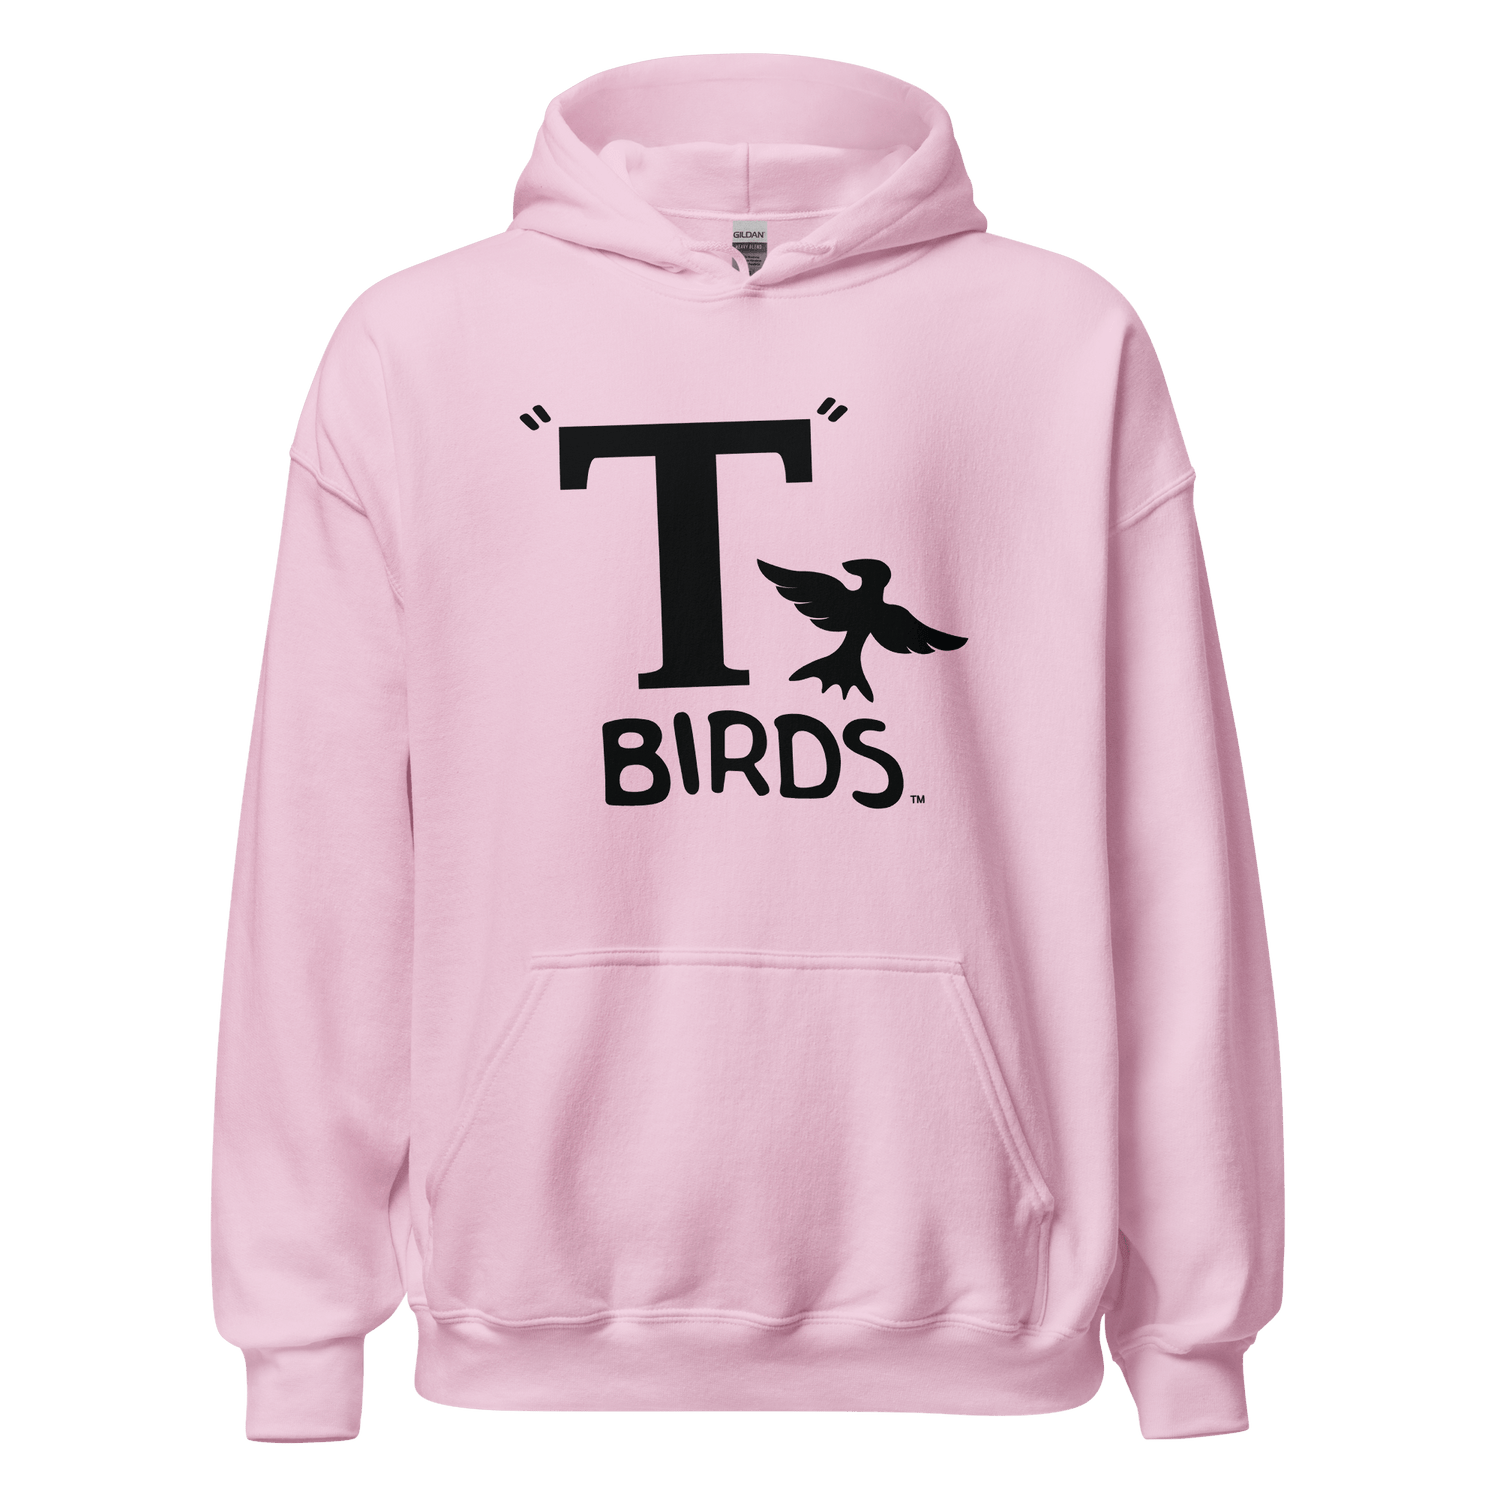 Grease T - Birds Hooded Sweatshirt - Paramount Shop